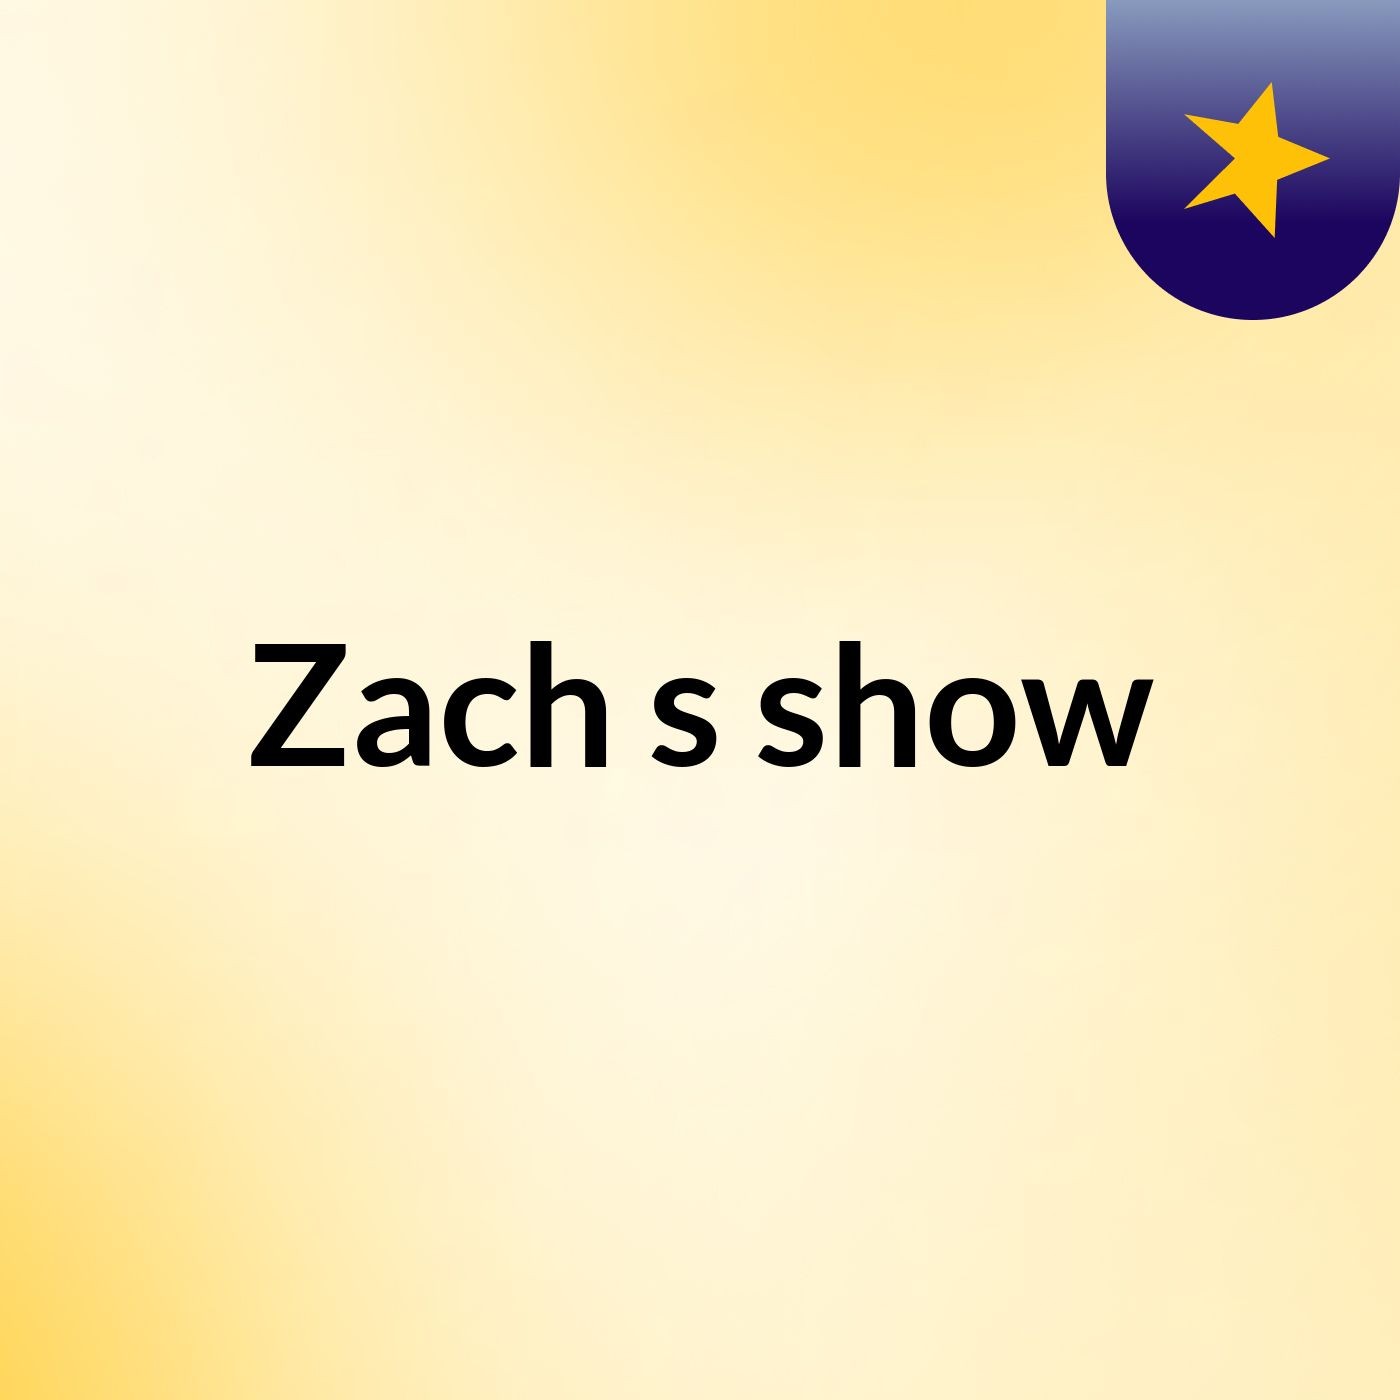 Zach's show